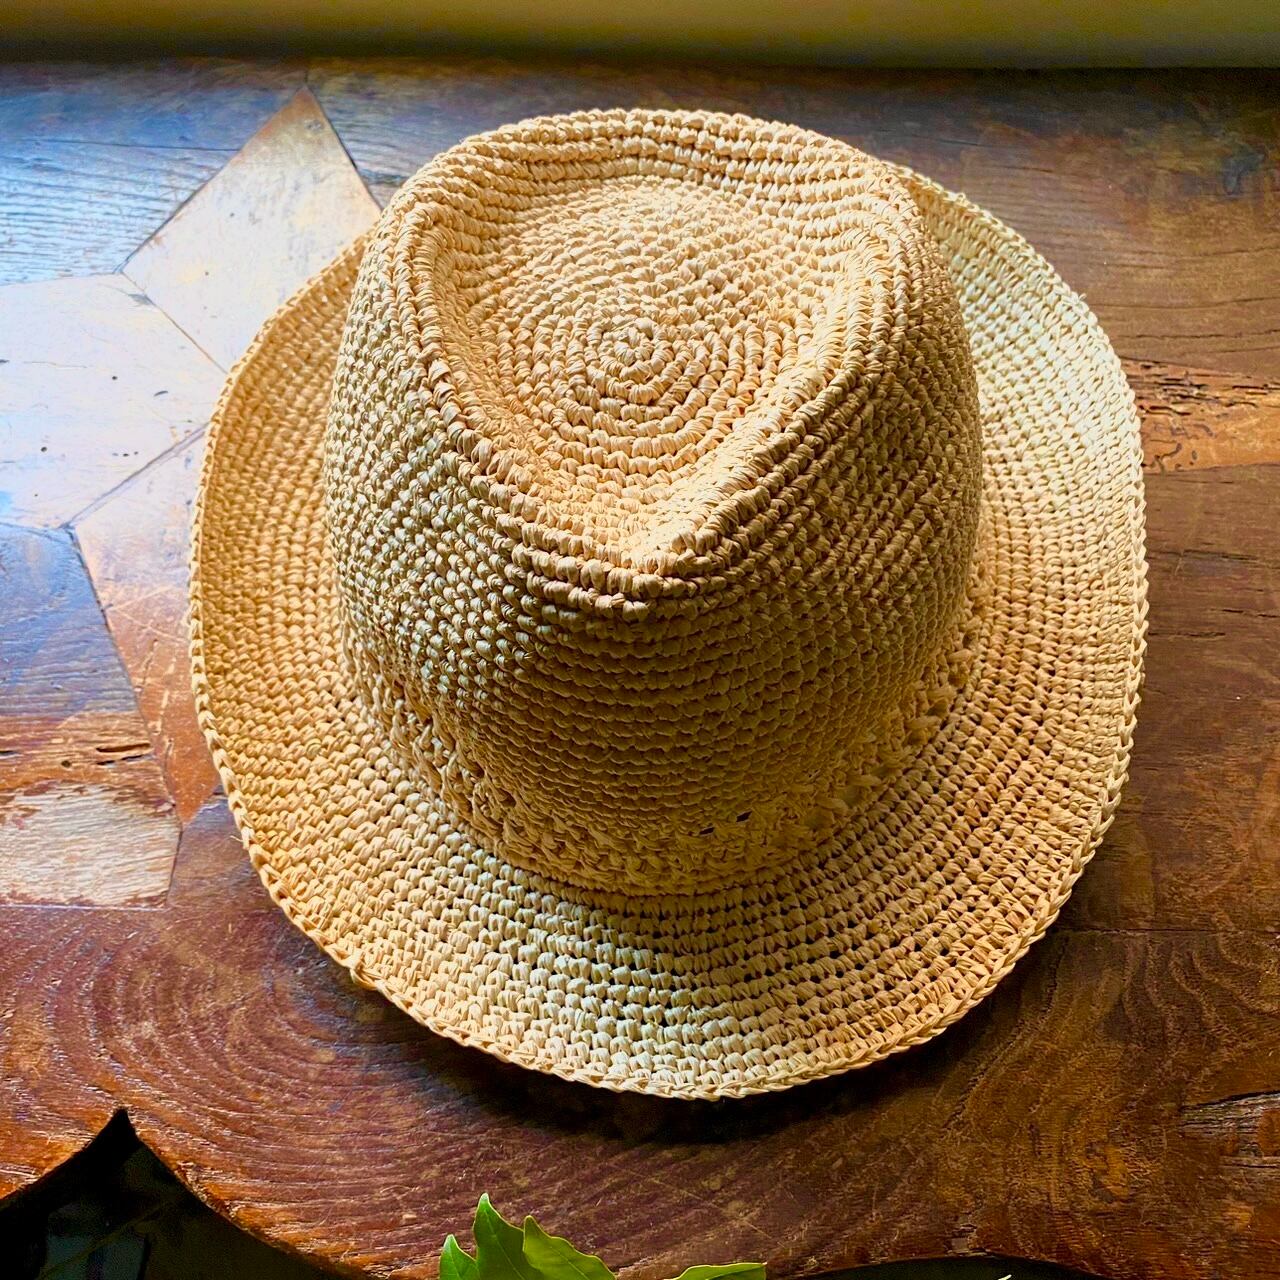 IVAHONA(イバオナ)の帽子